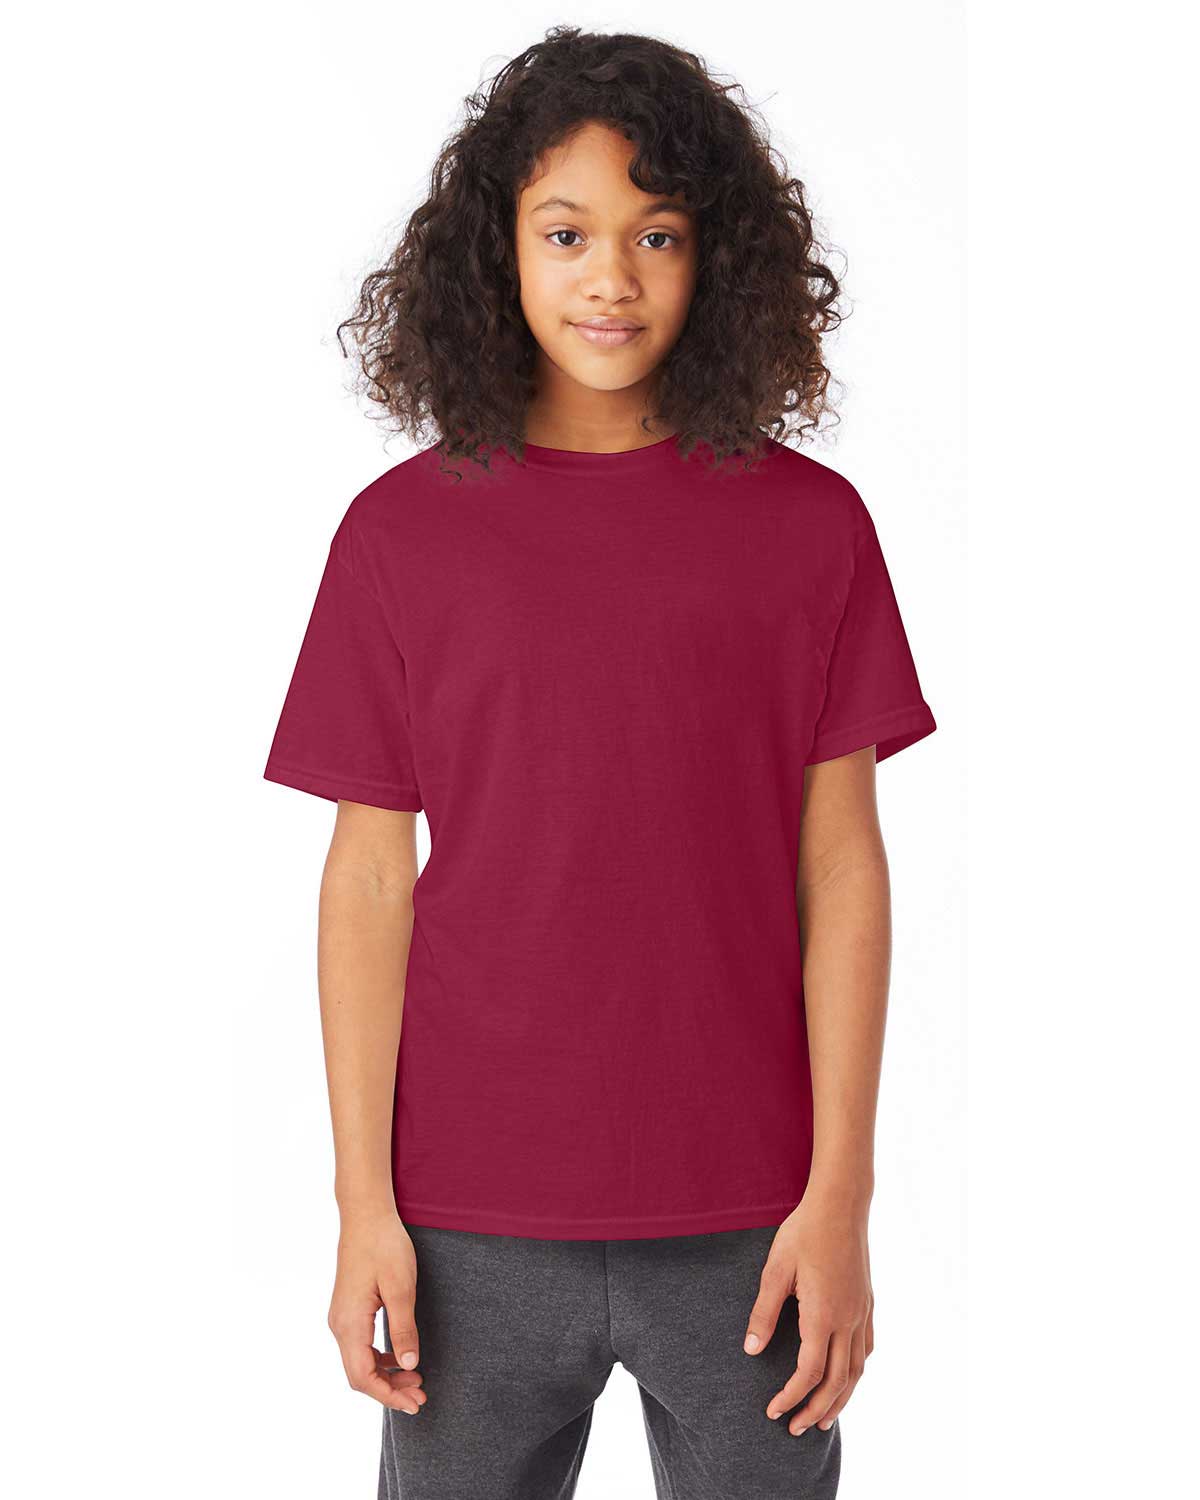 Hanes 5370 Boys 50/50 Comfort Blend Eco Smart T-Shirt at Apparelstation